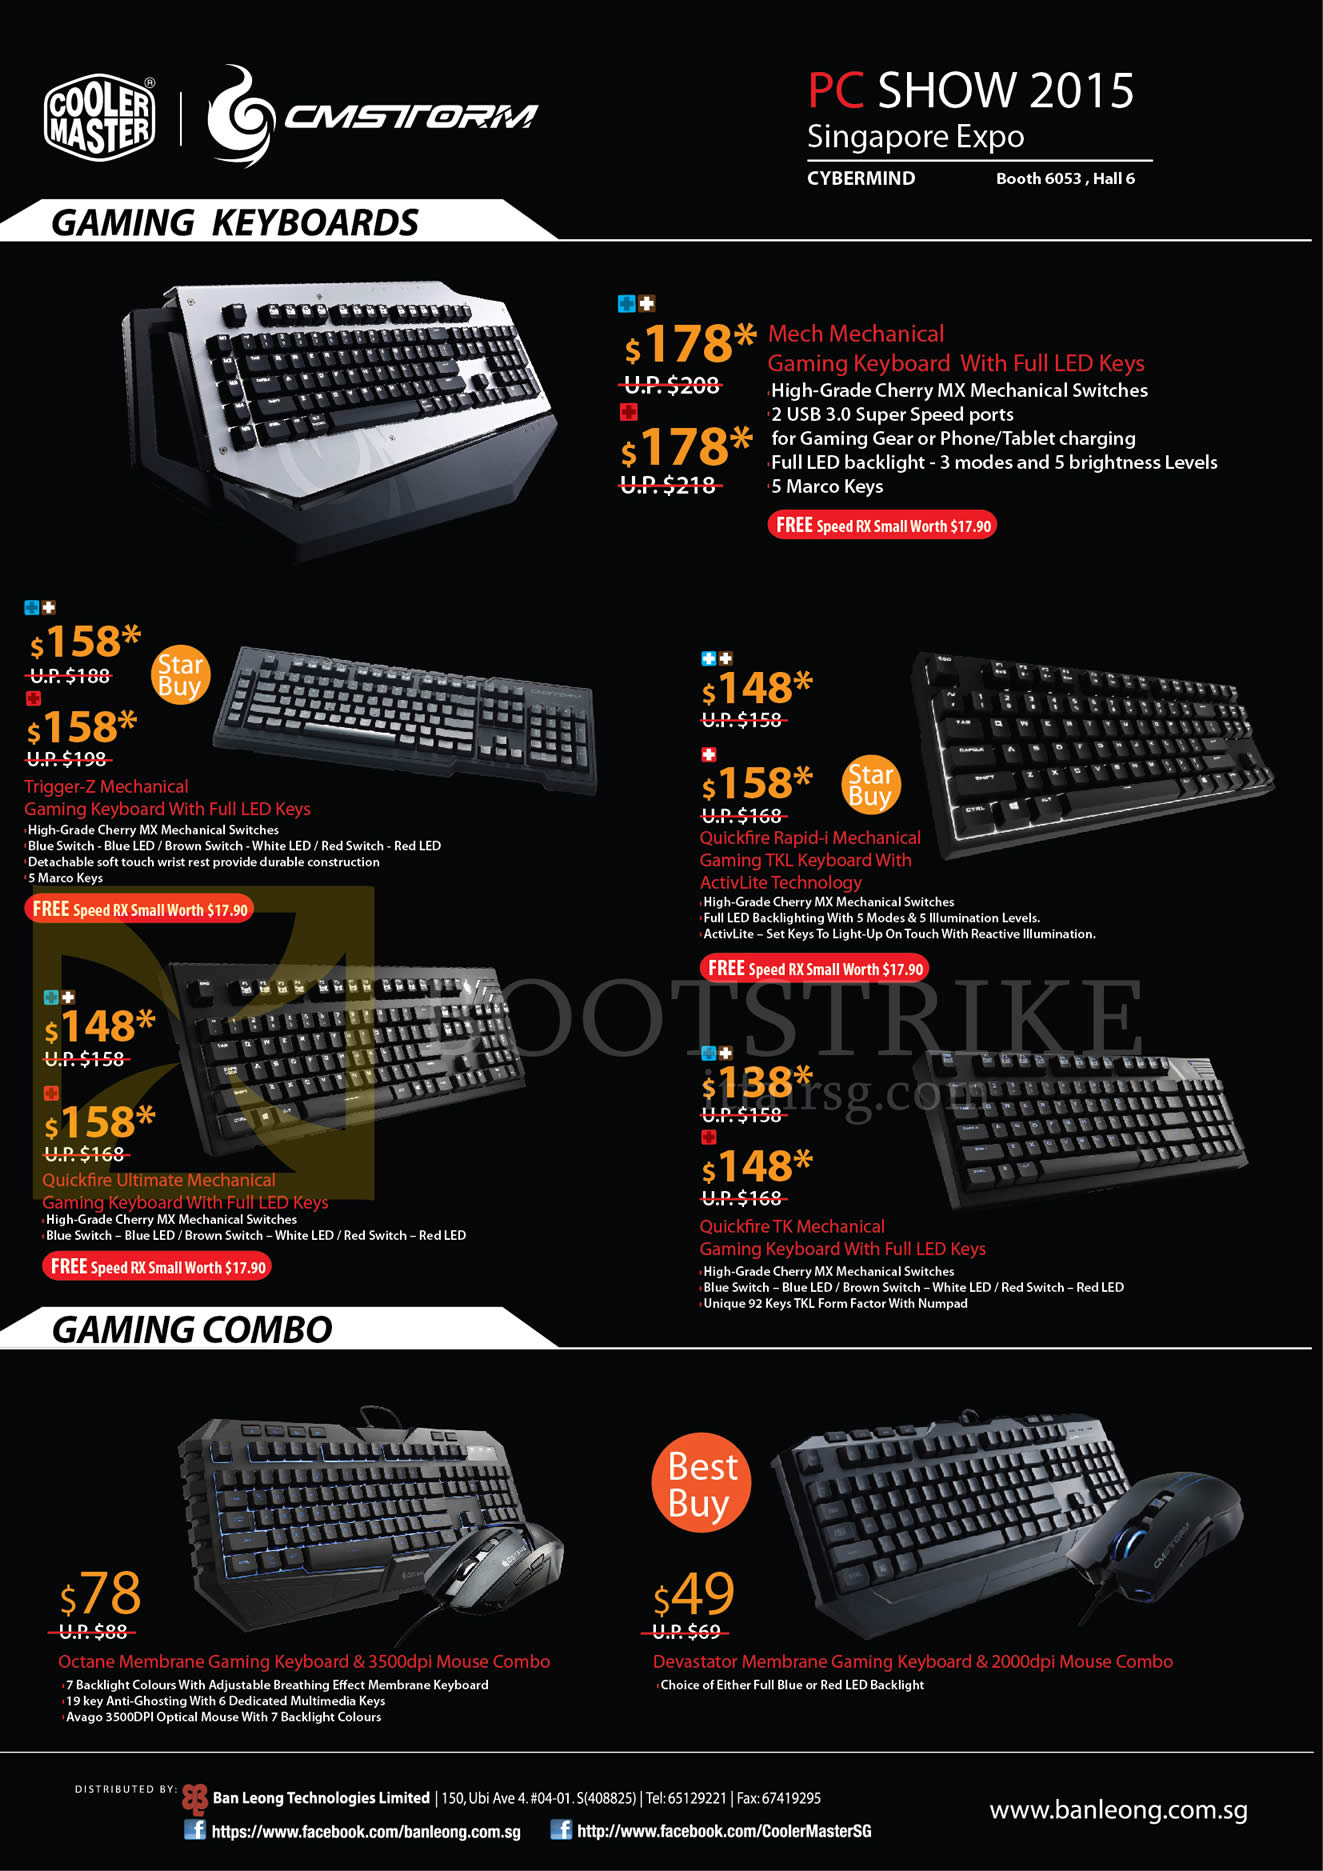 PC SHOW 2015 price list image brochure of Cooler Master Cybermind, CMStorm, Gaming Keyboards, Mech Mechanical, Trigger-Z Mechanical, Quickfire Rapid-i, TK Mechanical, Ultimate, Octane Membrane, Devastator